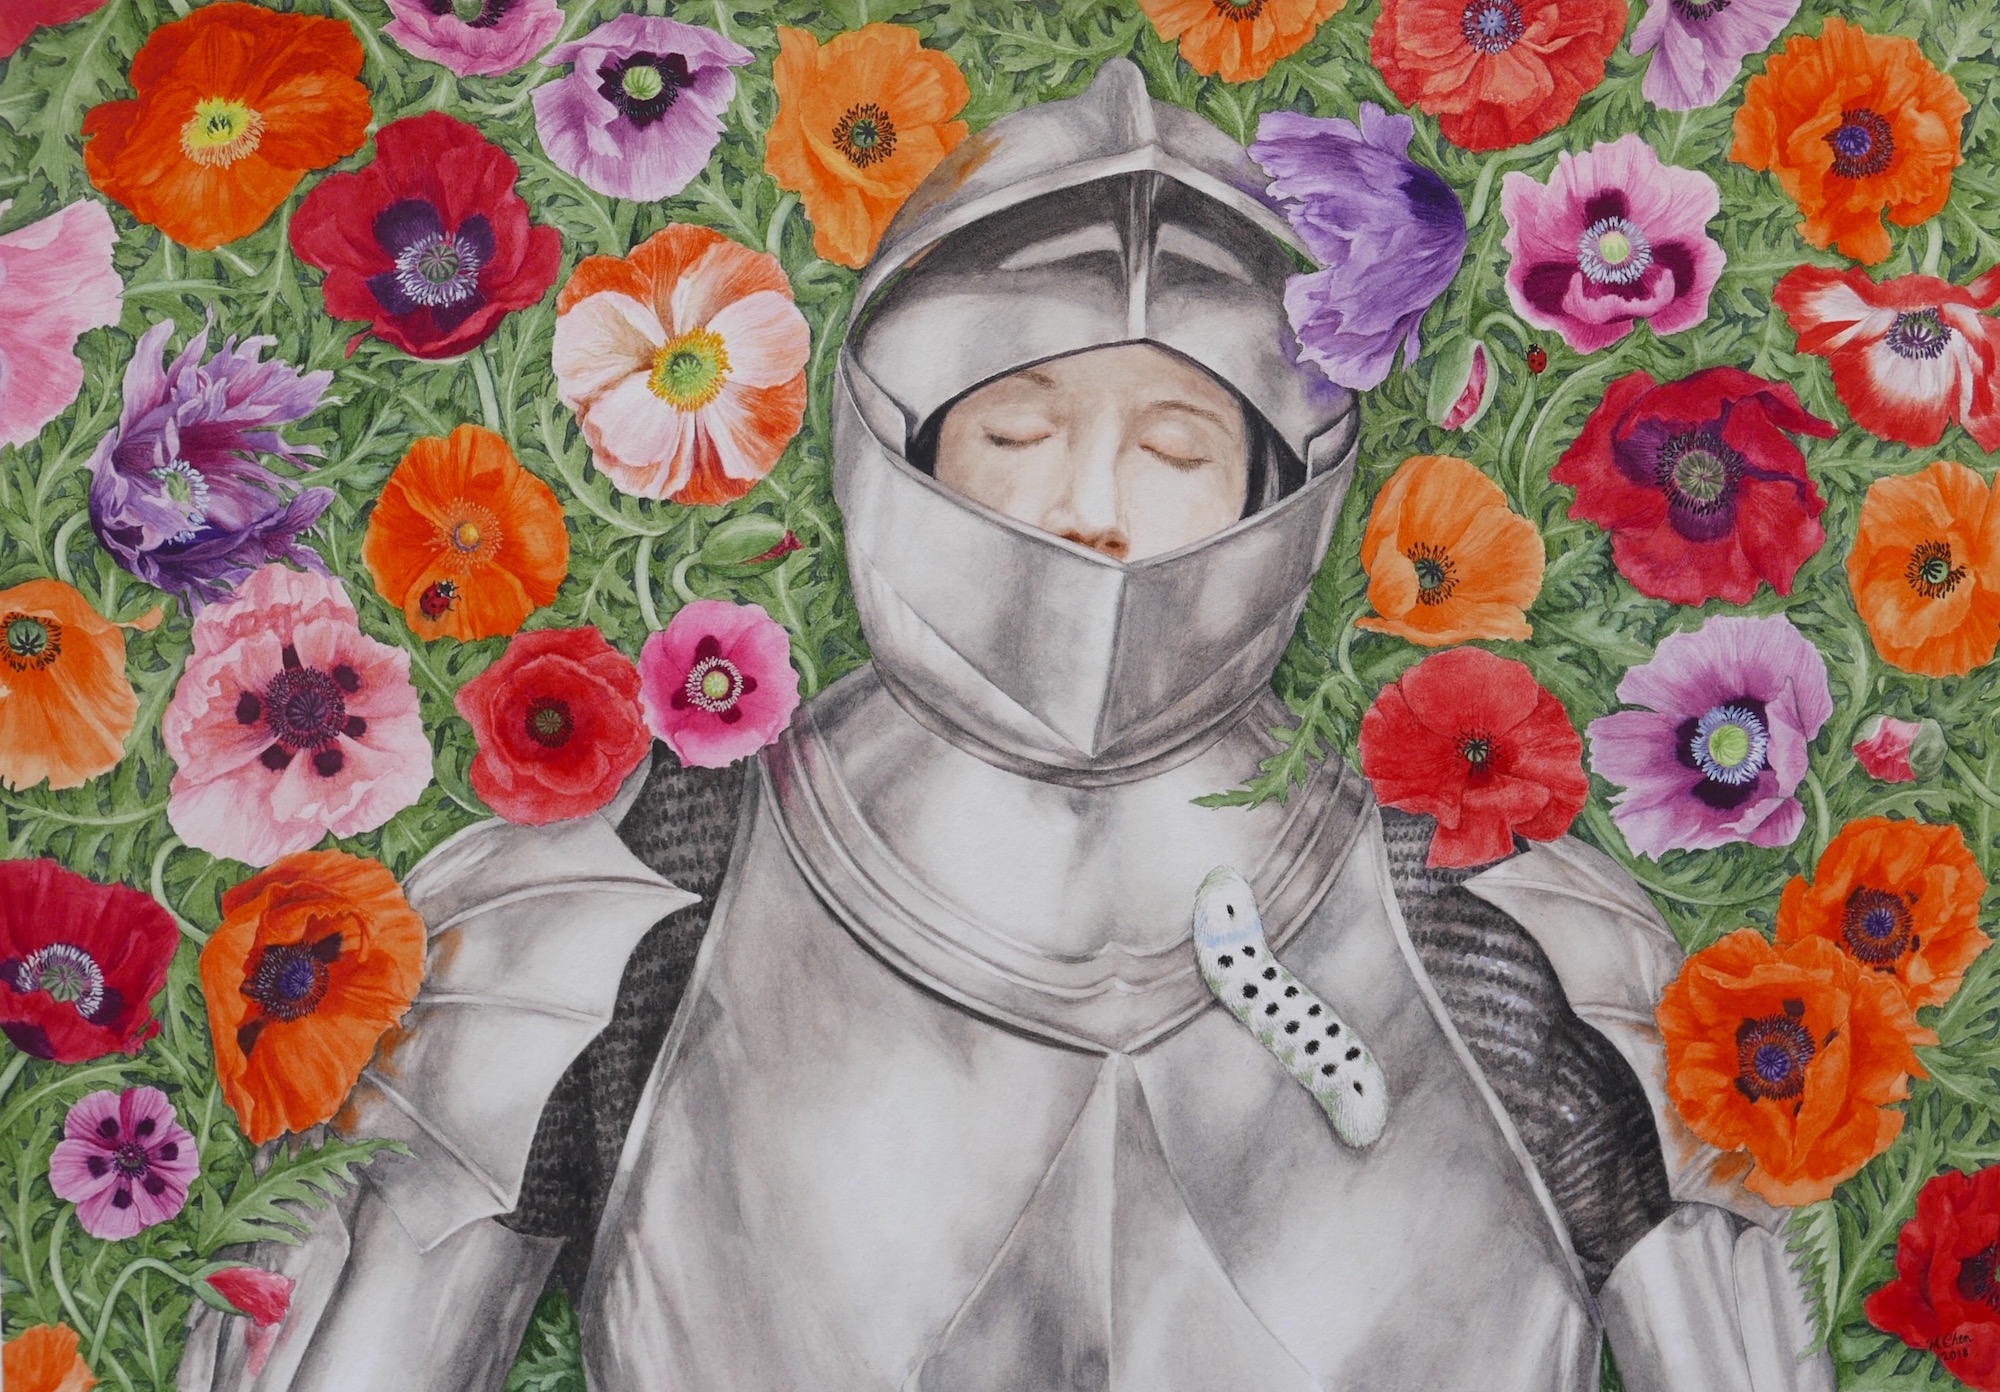 melissa chen art watercolour painting knight sleeping among poppies